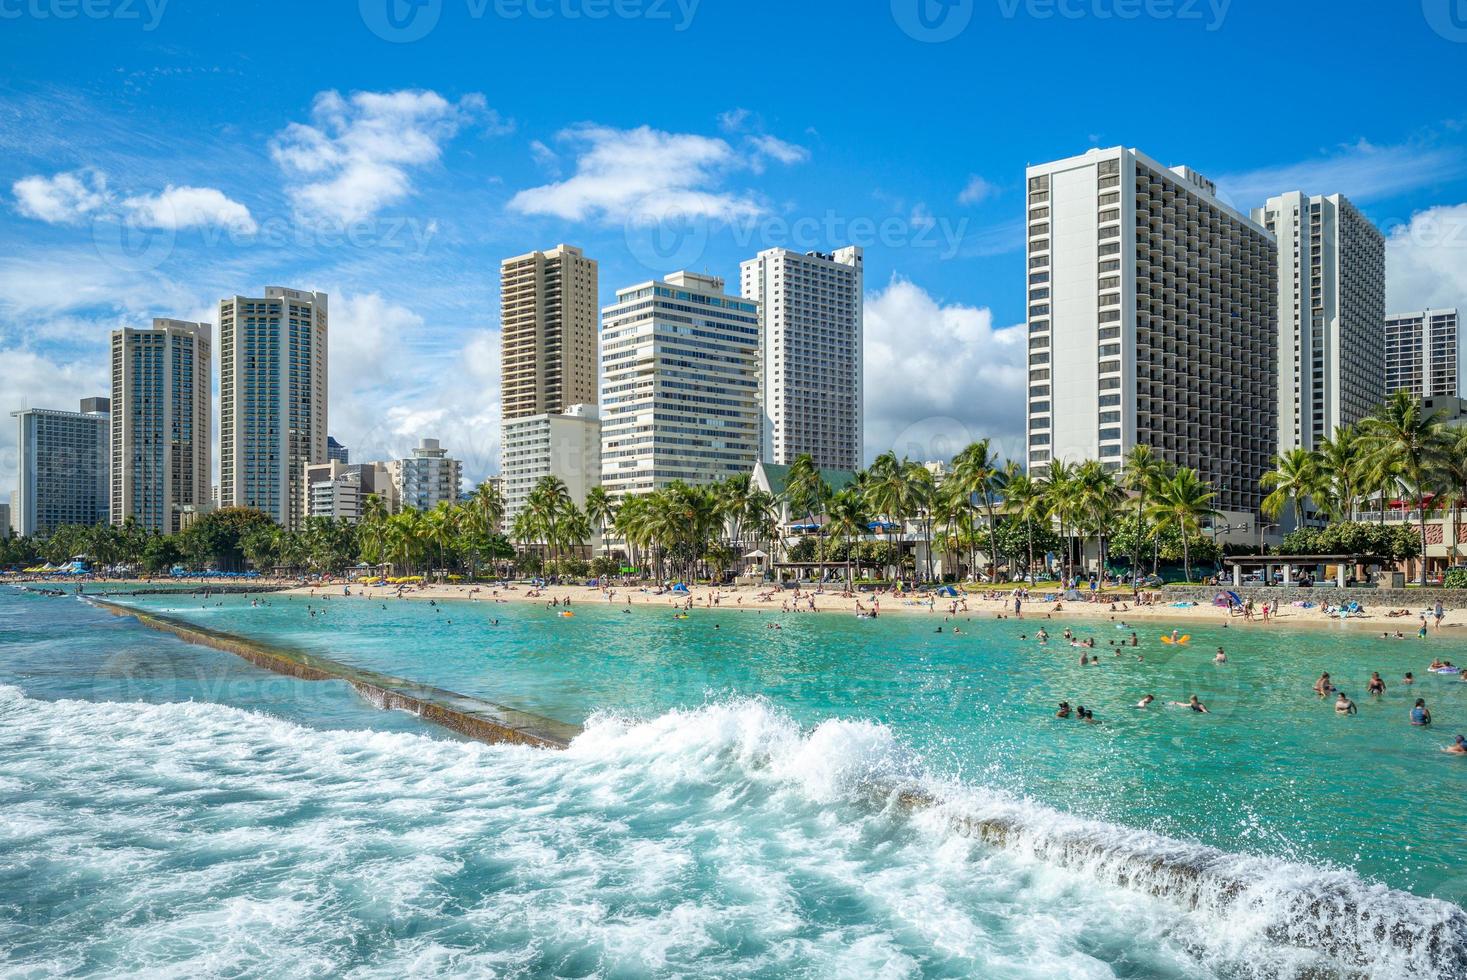 skyline av honolulu vid waikiki beach hawaii oss foto